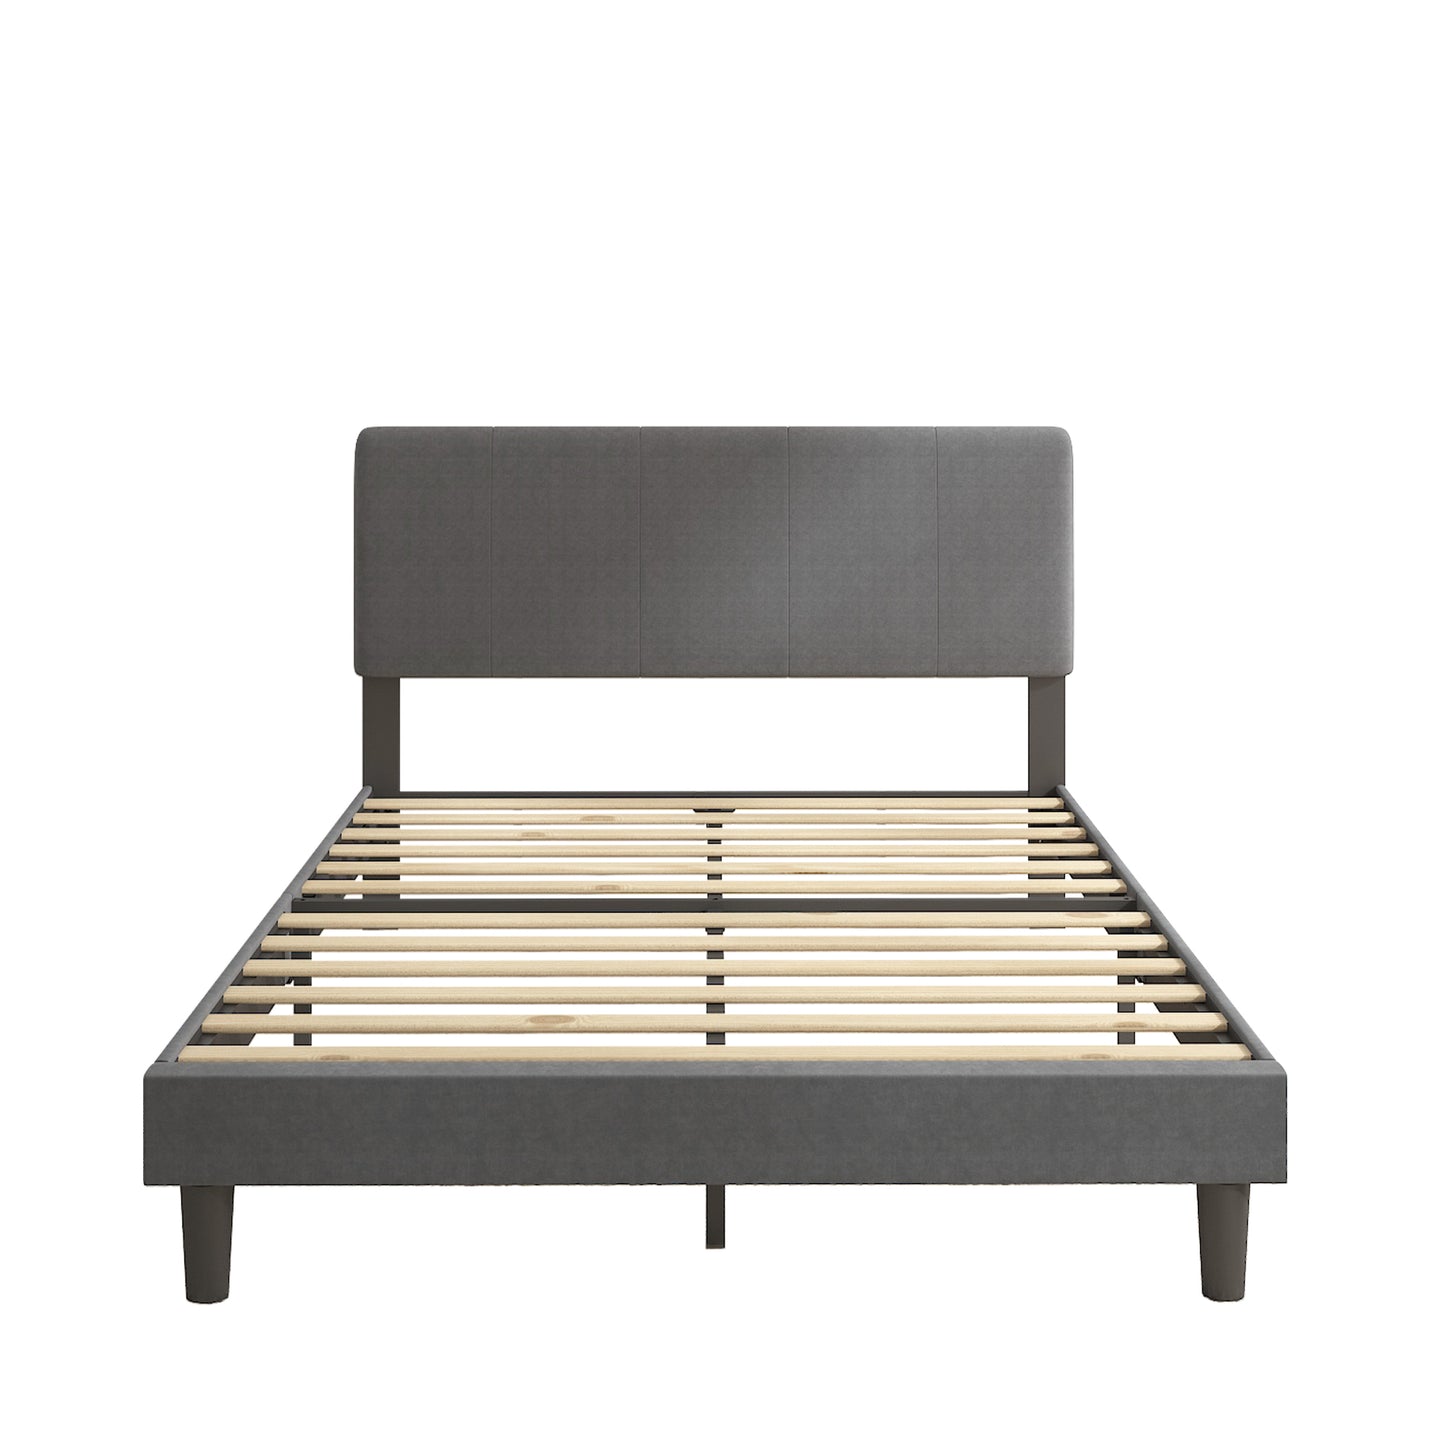 SYNGAR Full Bed Frame, New Upgrade Full Size Velvet Upholstered Platform Bed Frame with Tufted Headboard, Mattress Foundation Solid Wood Frame Platform Bed Frame, No Box Spring Needed, Grey